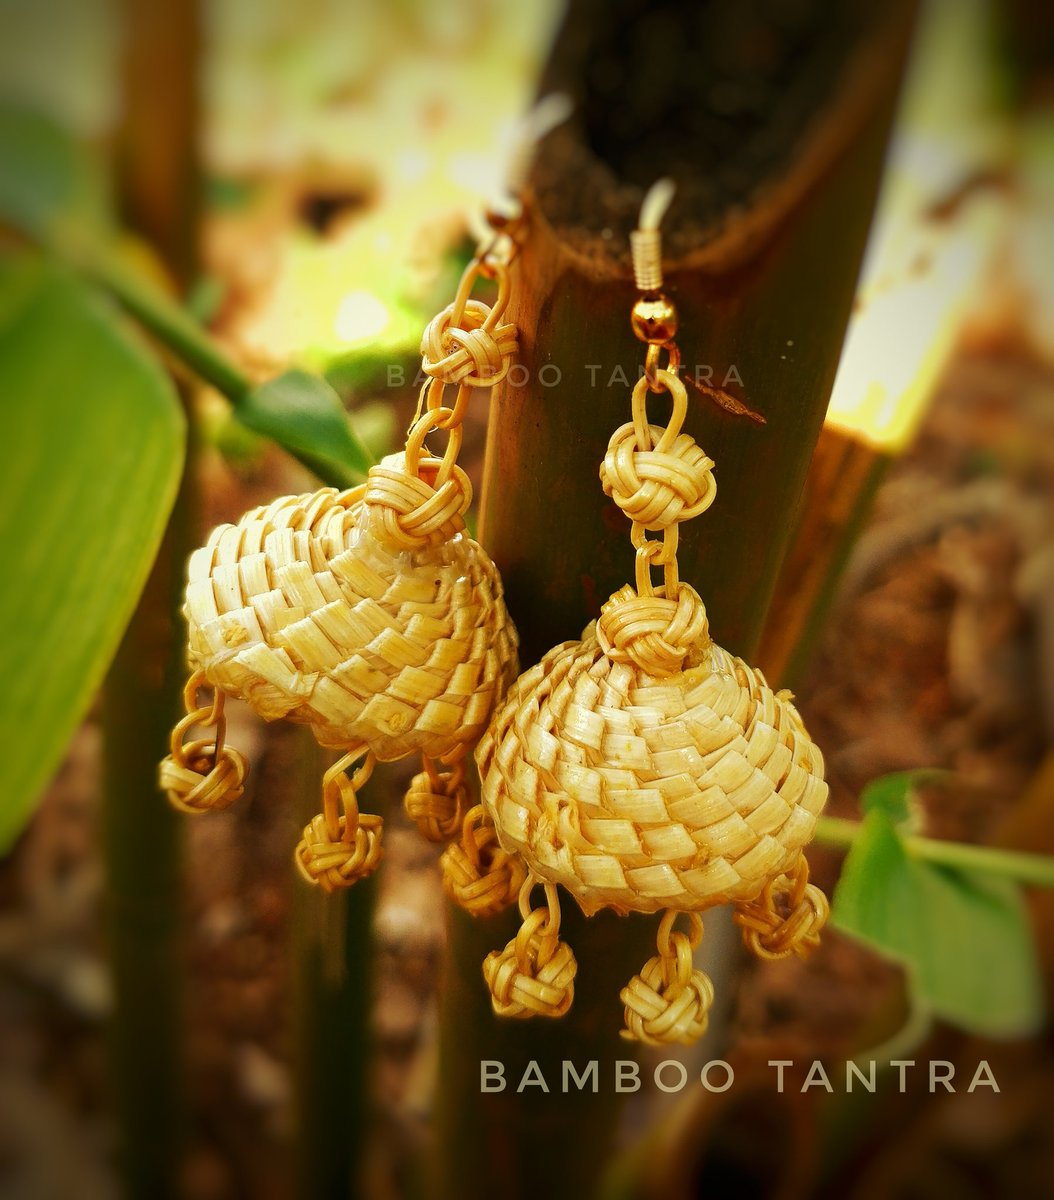 JHUMKA!
Every intricately designed handmade Bamboo Jhumka
JE120H35
#Jhumka #bamboojewellery #bamboo #bambooearrings #Bambooartisans #artisansofindia #handmadeIndia #handcrafted #bamboocraft #ecofriendlyjewellery  #handicrafts #zumka  #bamboojhumka #supportartisans #supportsmall